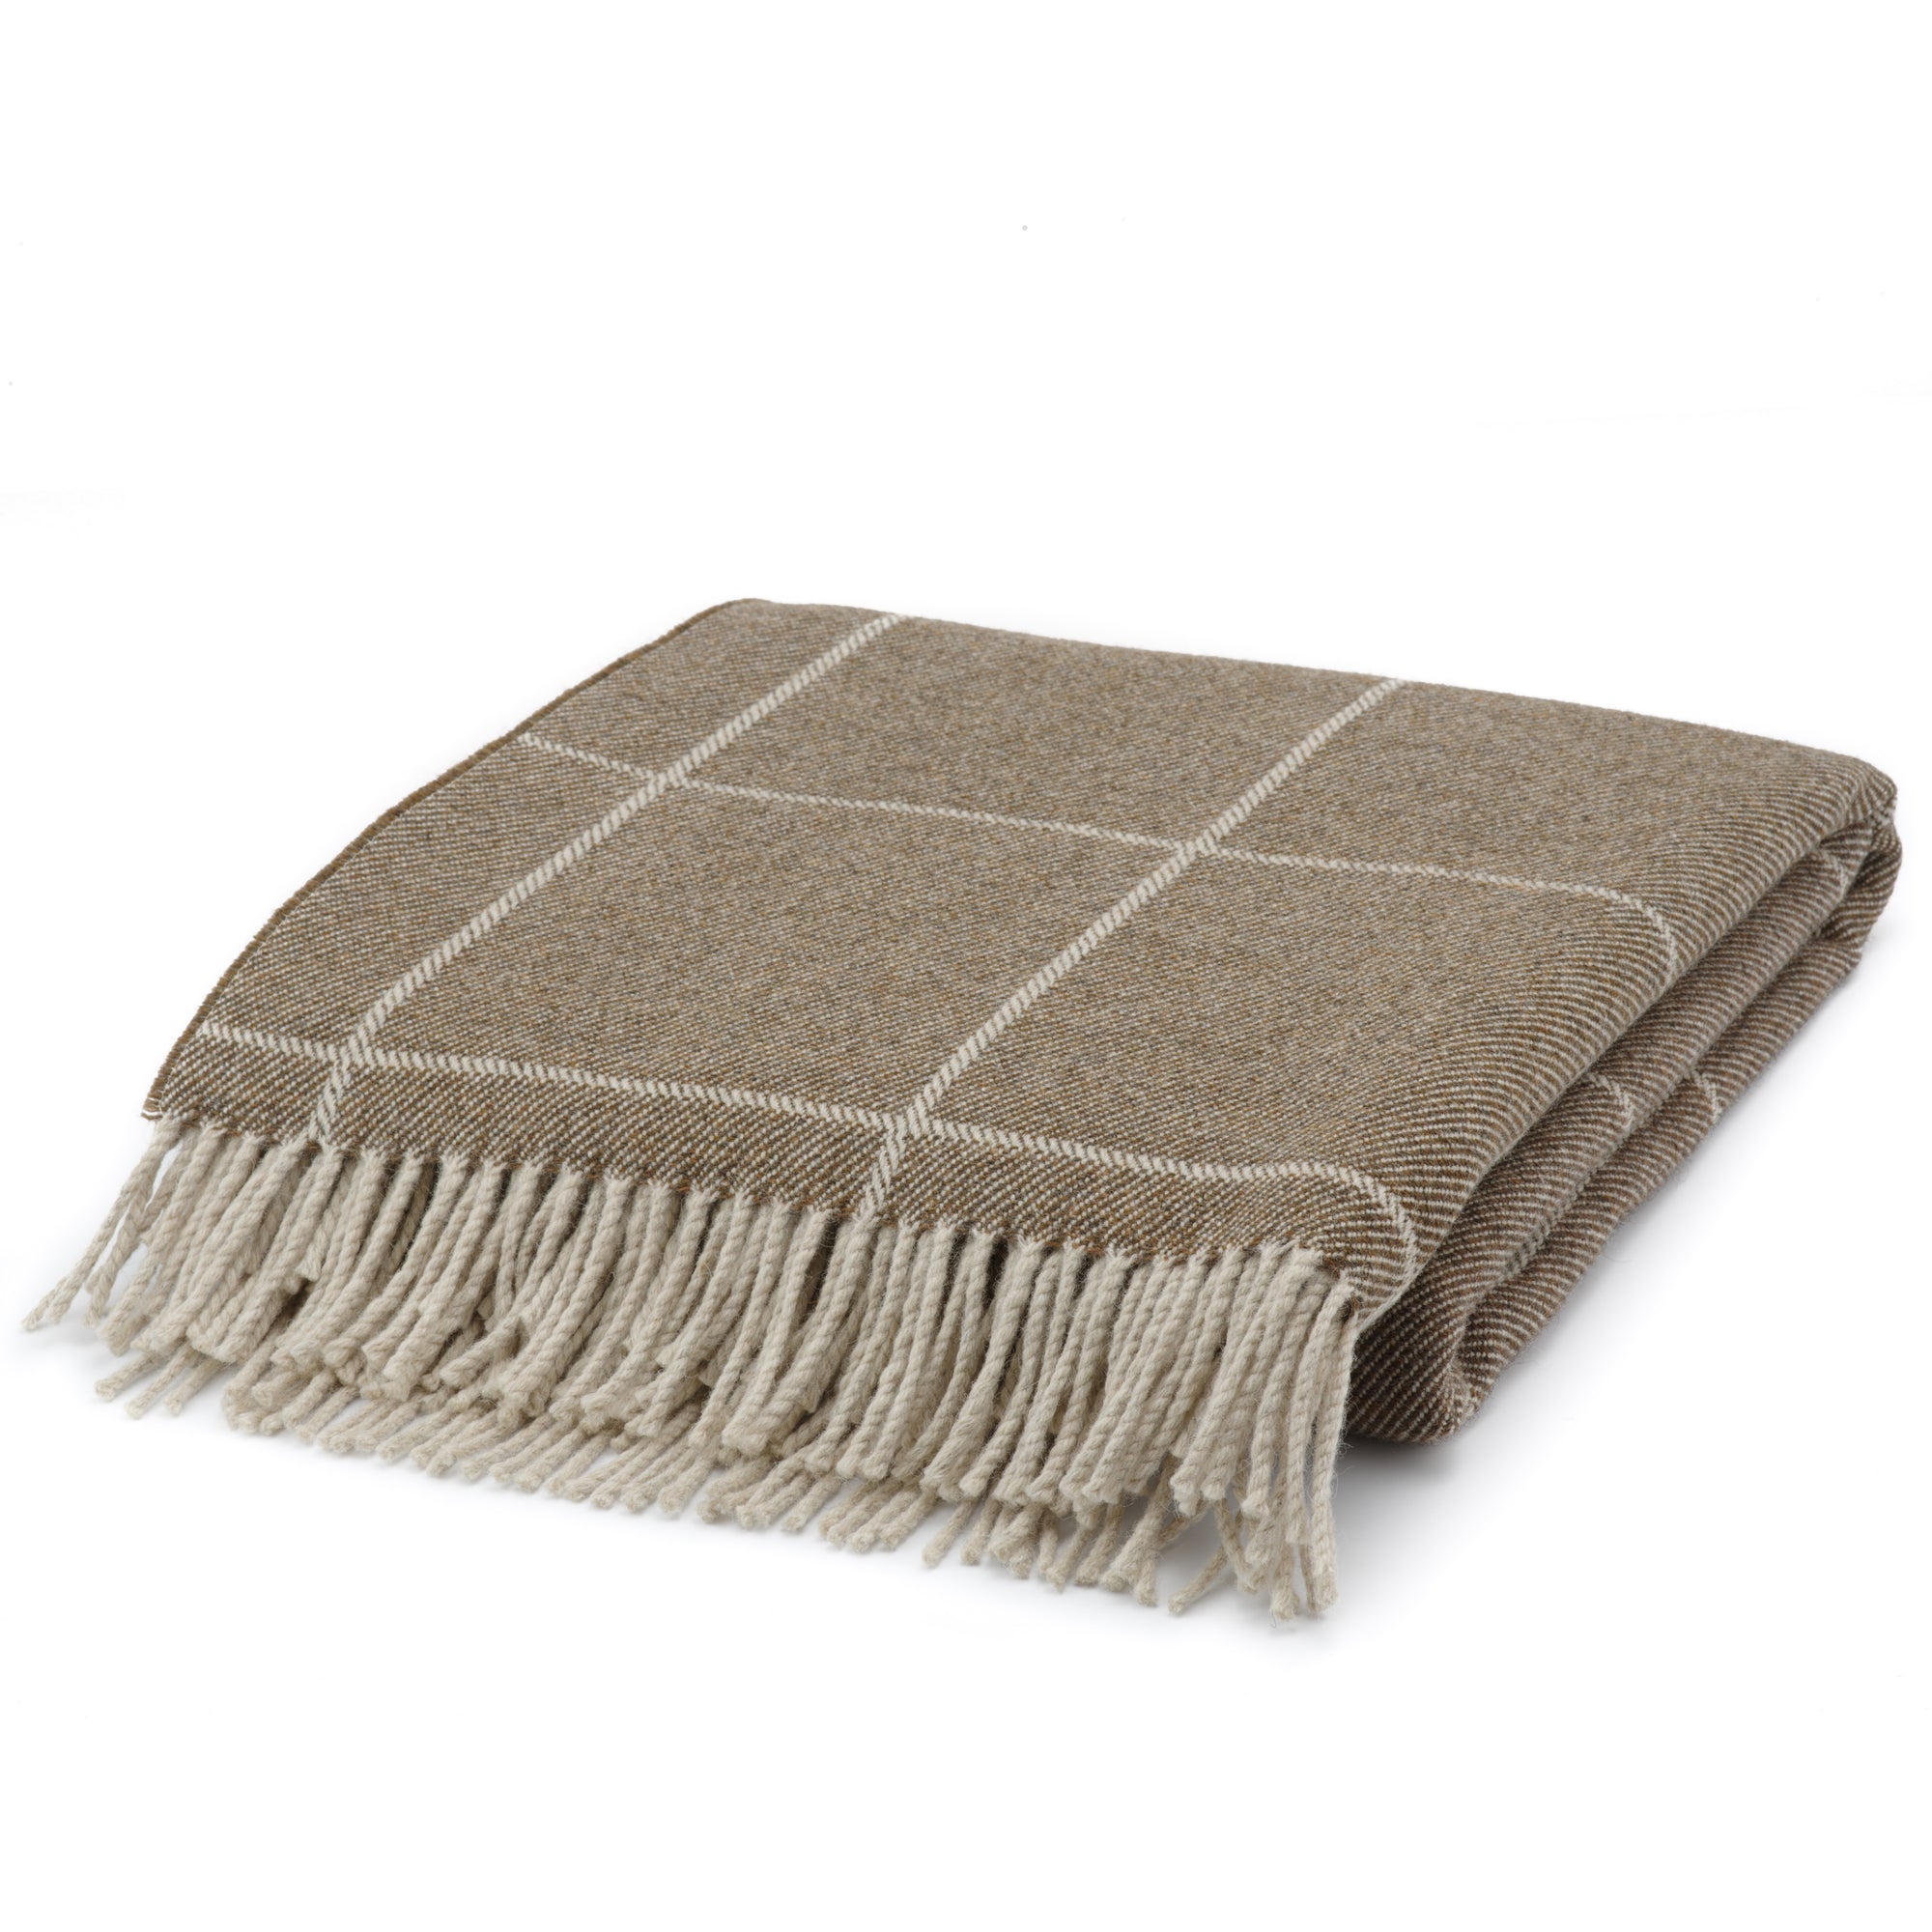 Inchyra Scottish Wool Throw in Conker